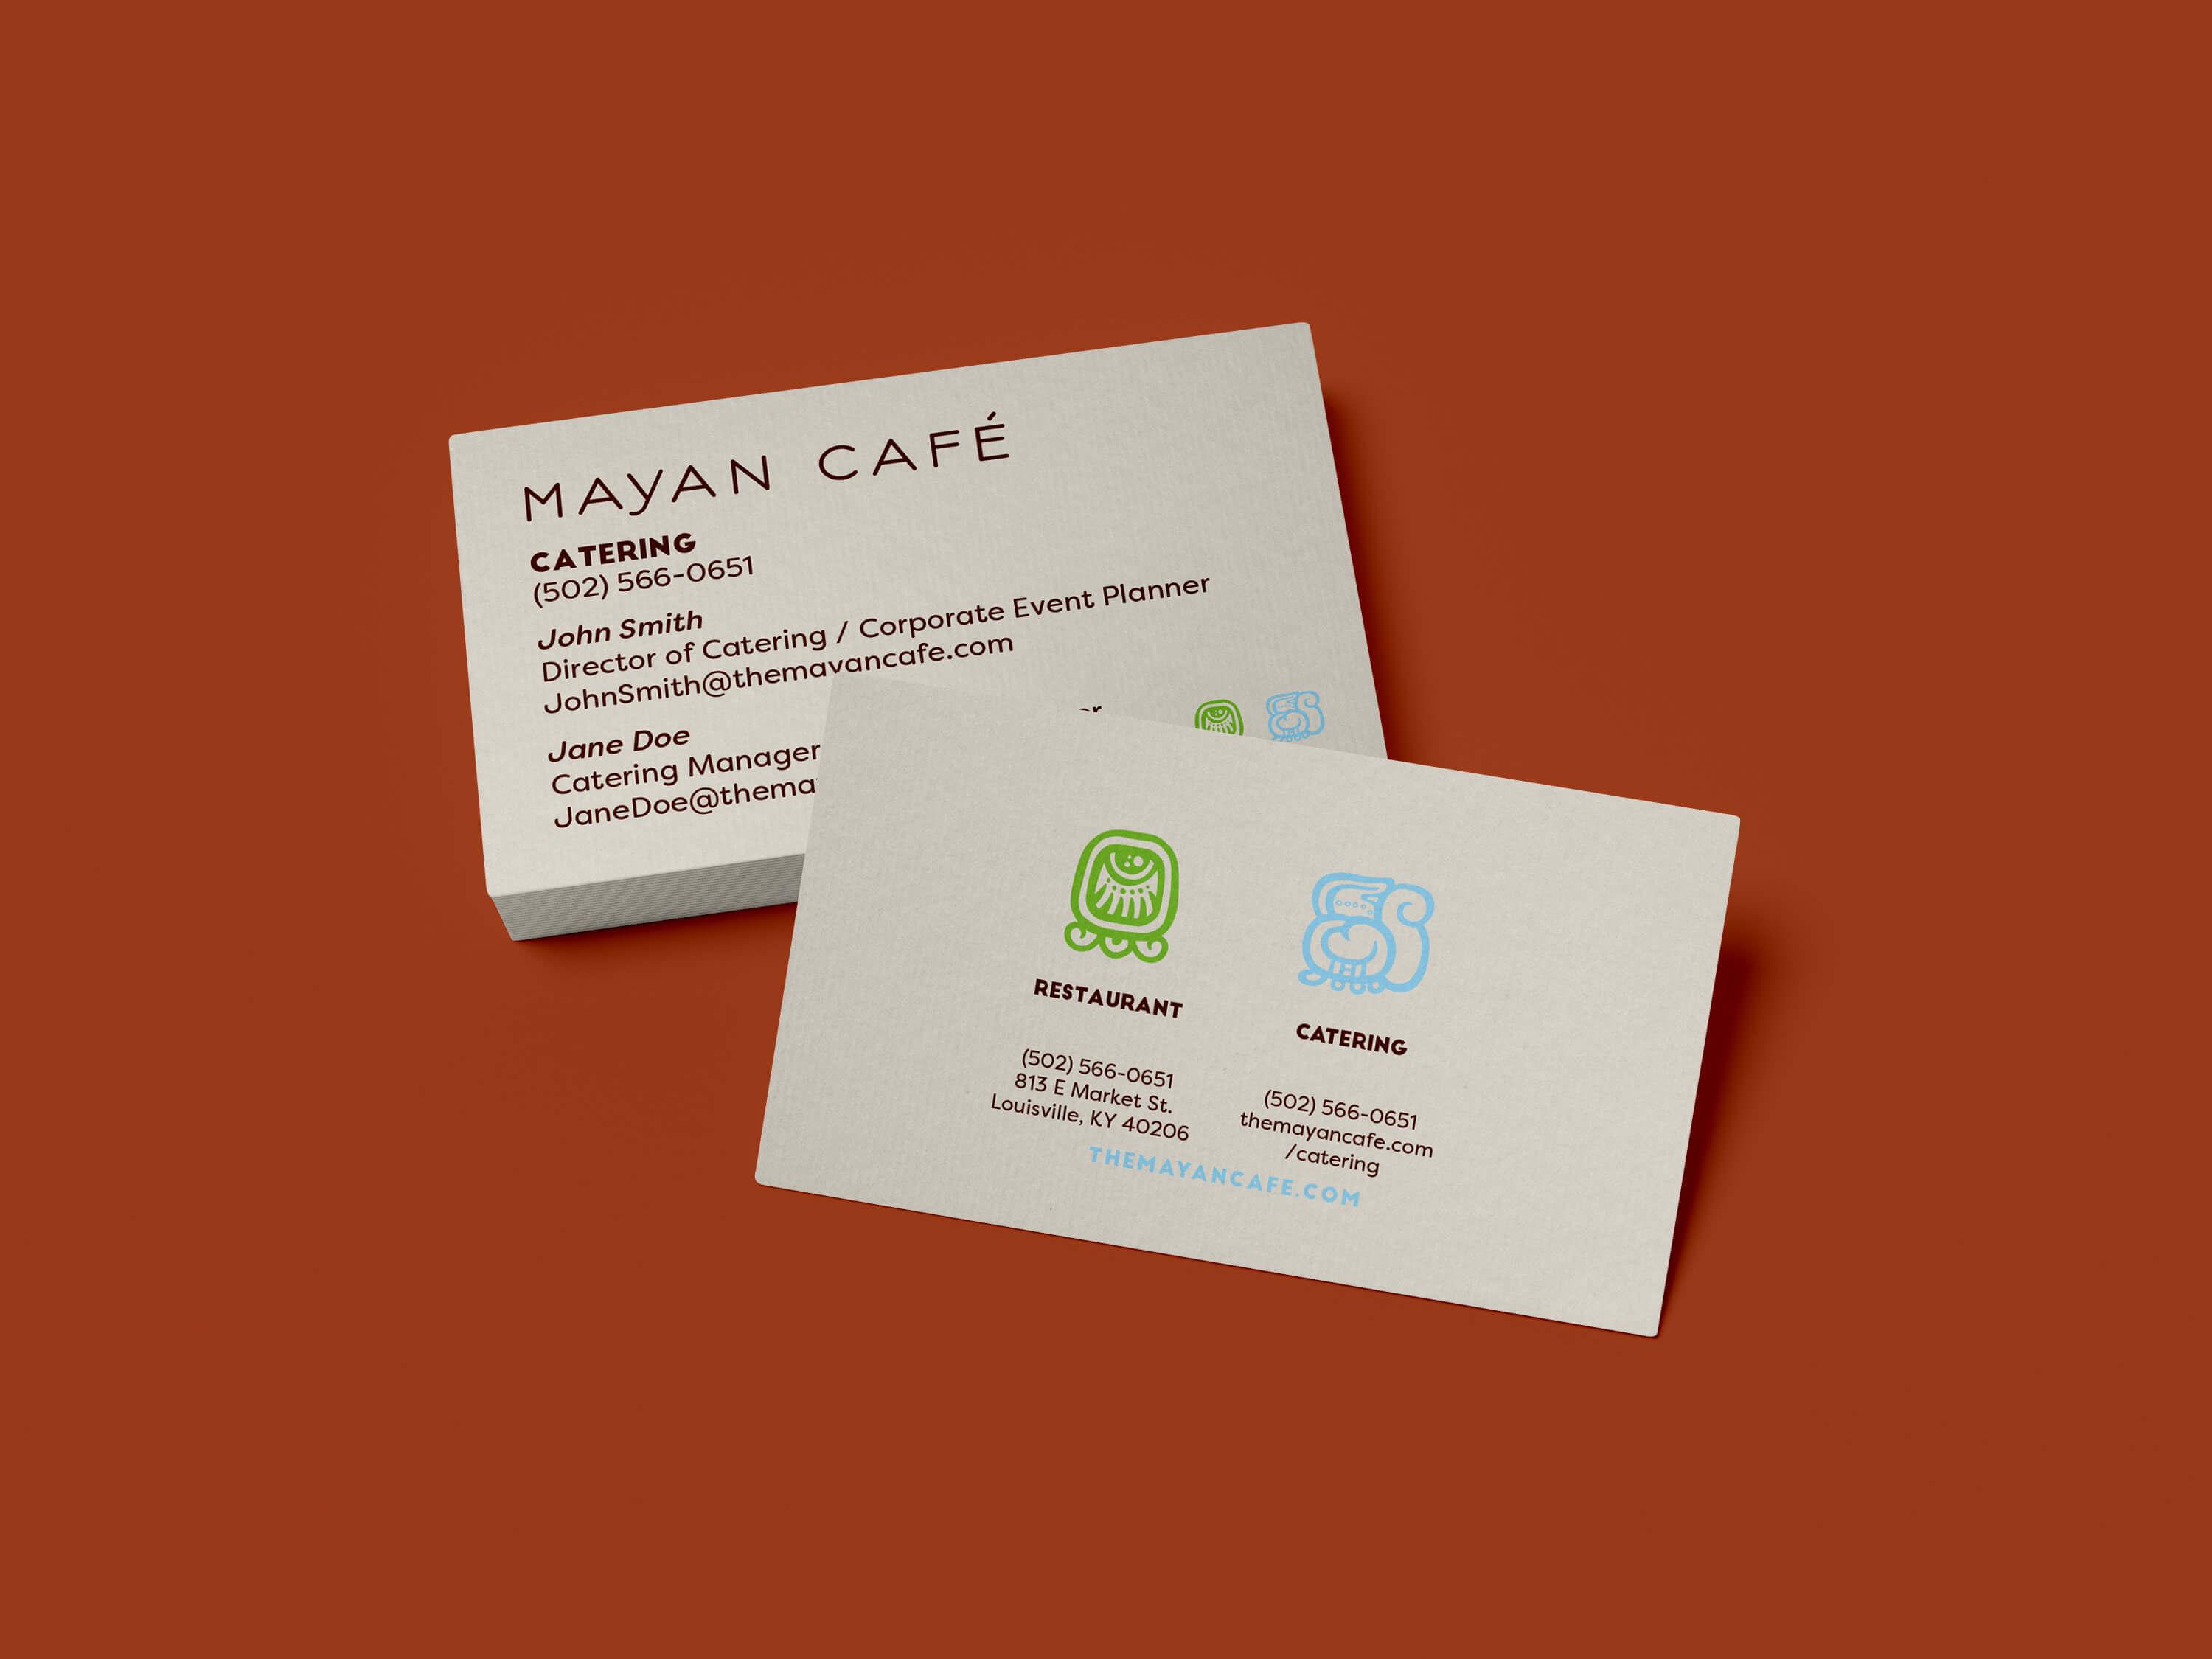 Mayan Cafe catering business card design.